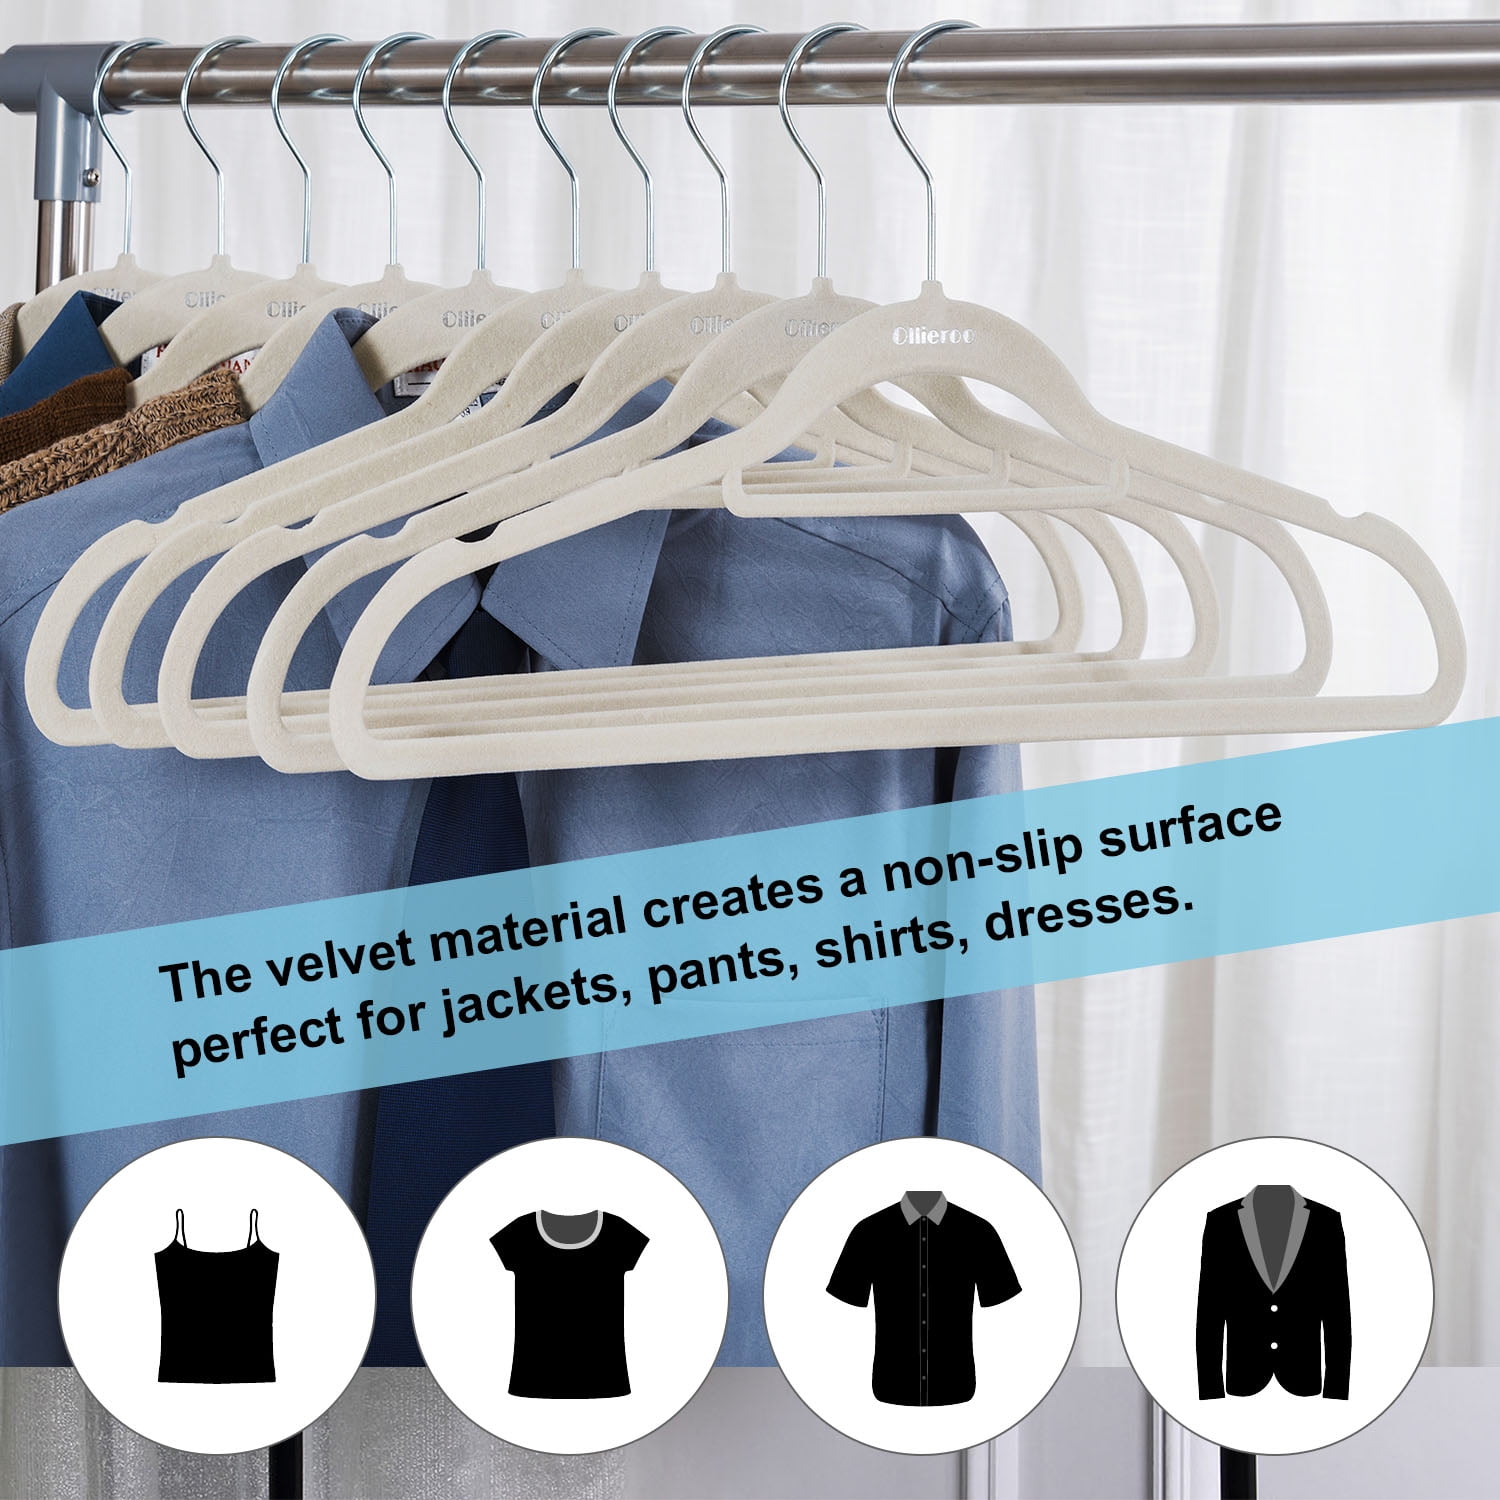 LifeMaster Premium Quality Velvet Non-Slip Clothes Hangers - Set of 50 Sturdy Black Plastic Coat Hangers with Smooth 360° Swivel Hooks for